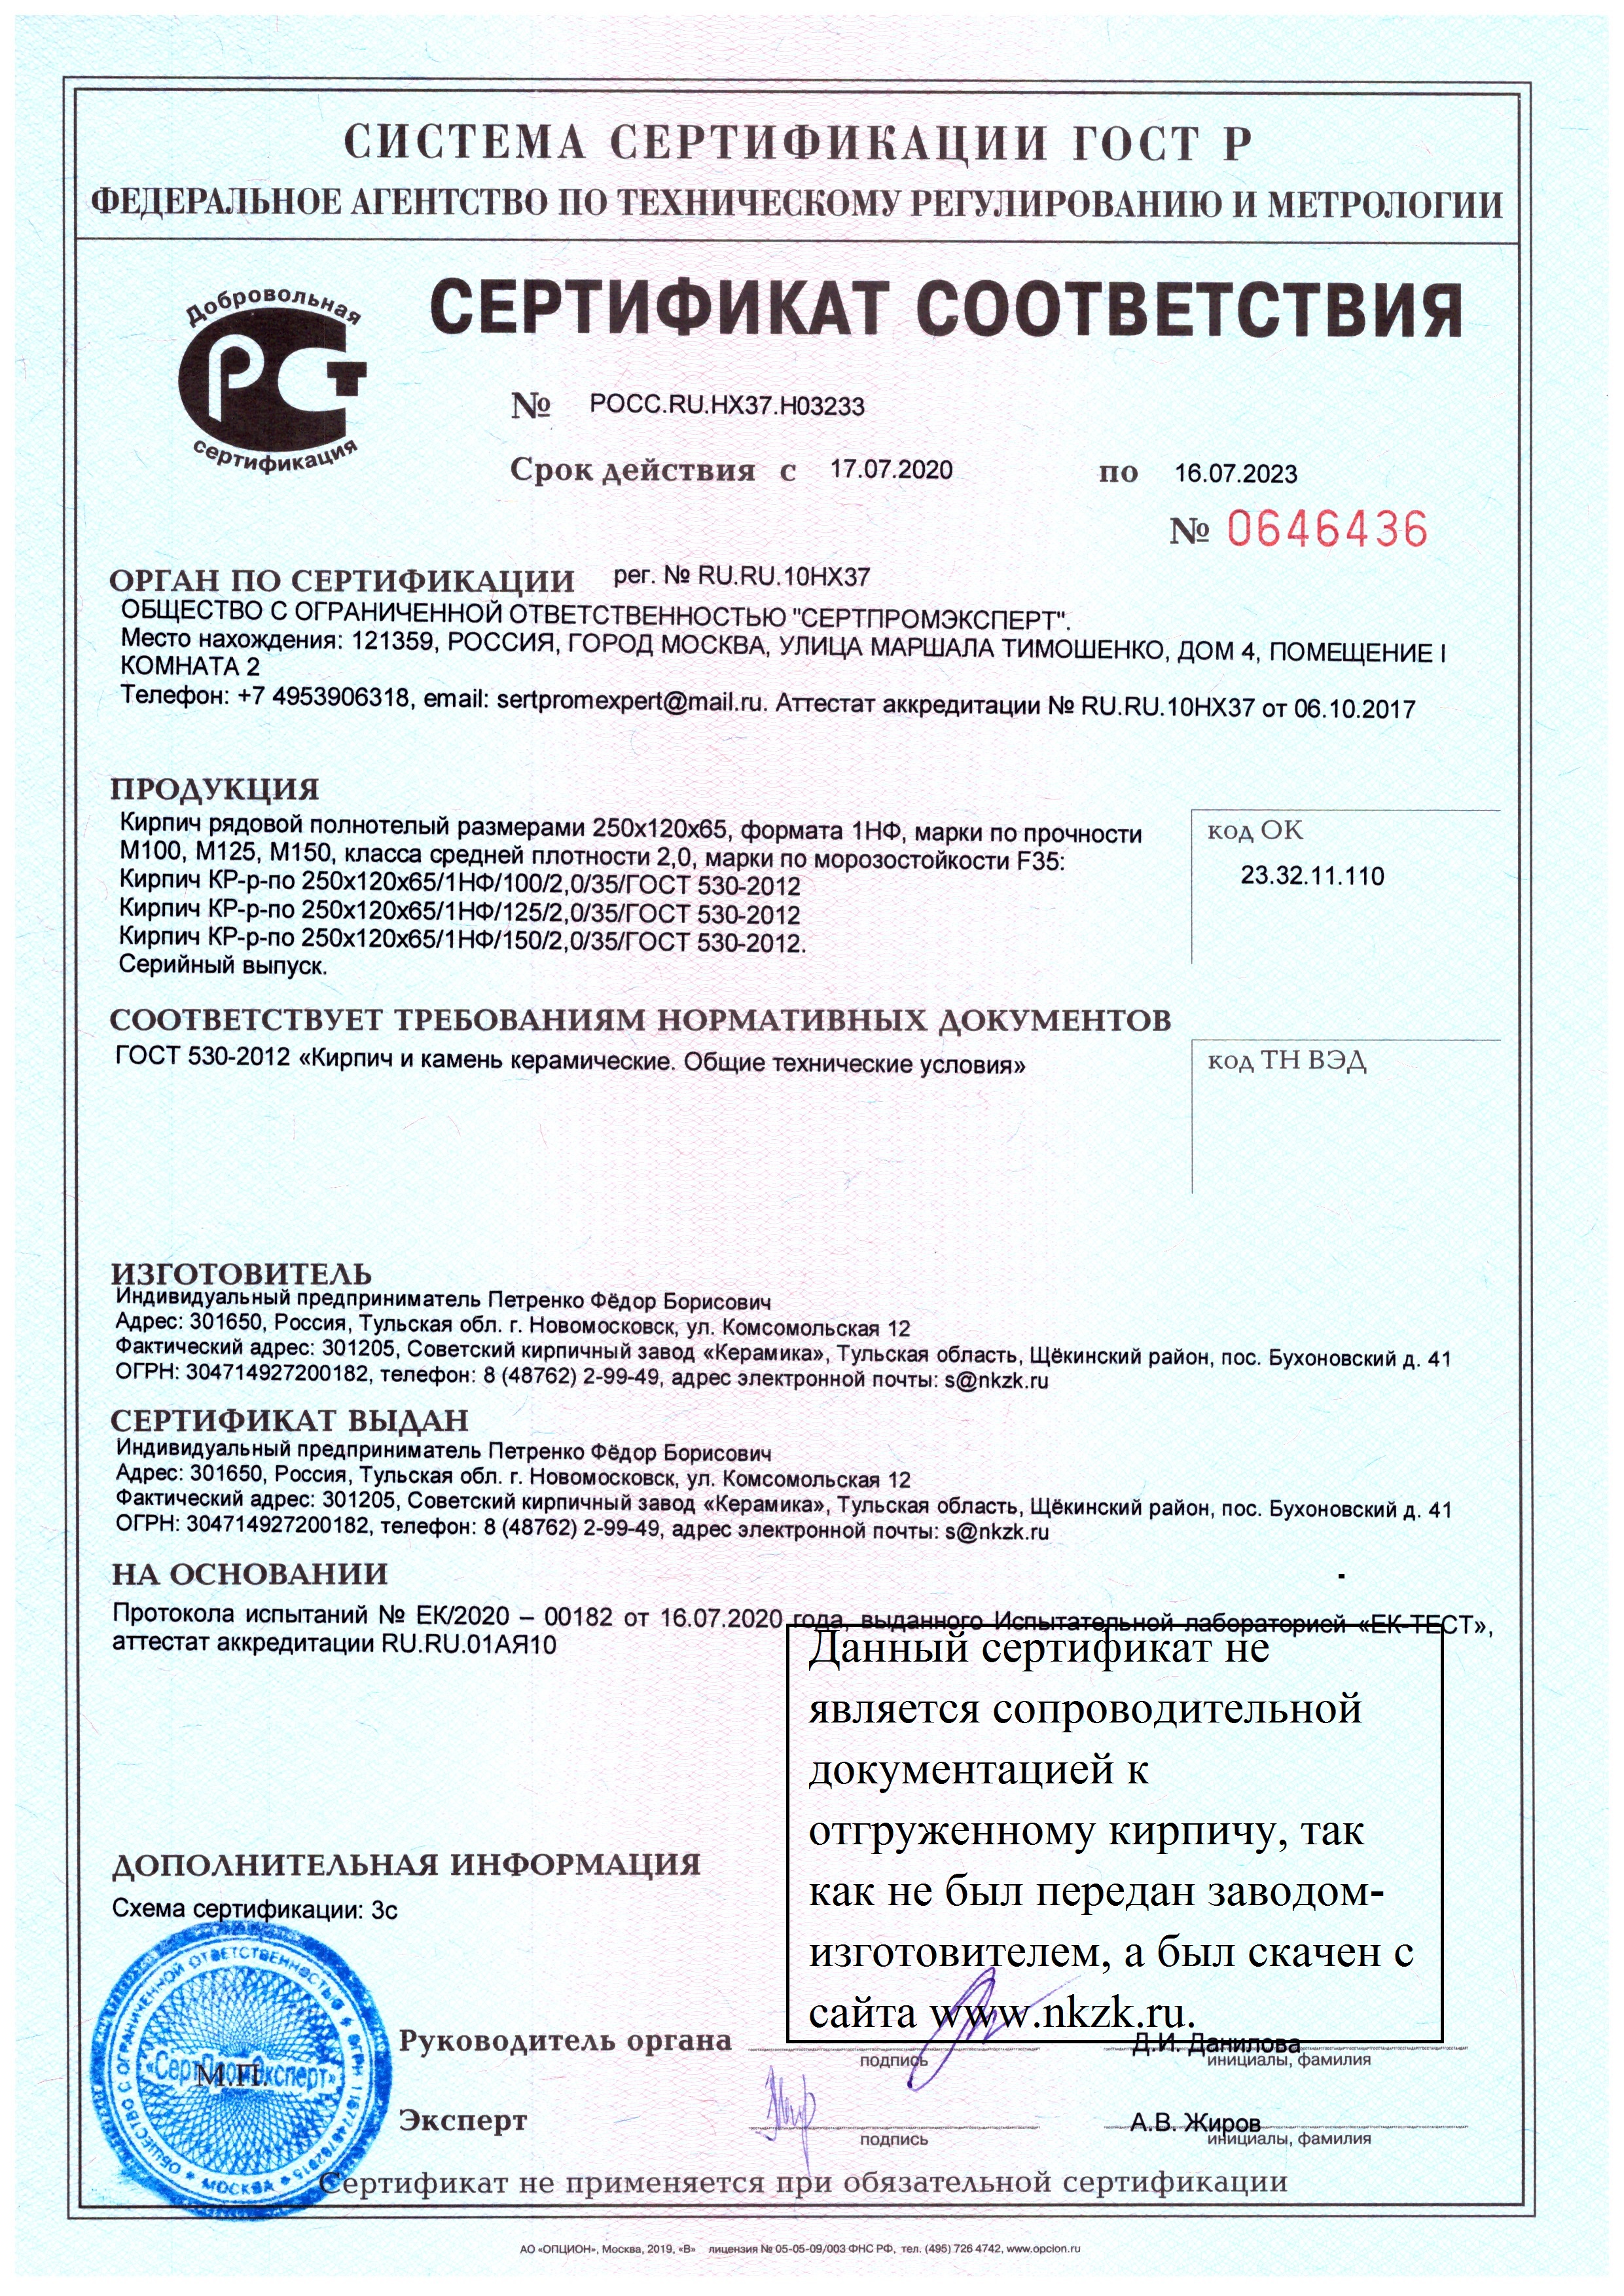 Сертификат на кирпич марки 100, 125, 150, морозостойкостью 35